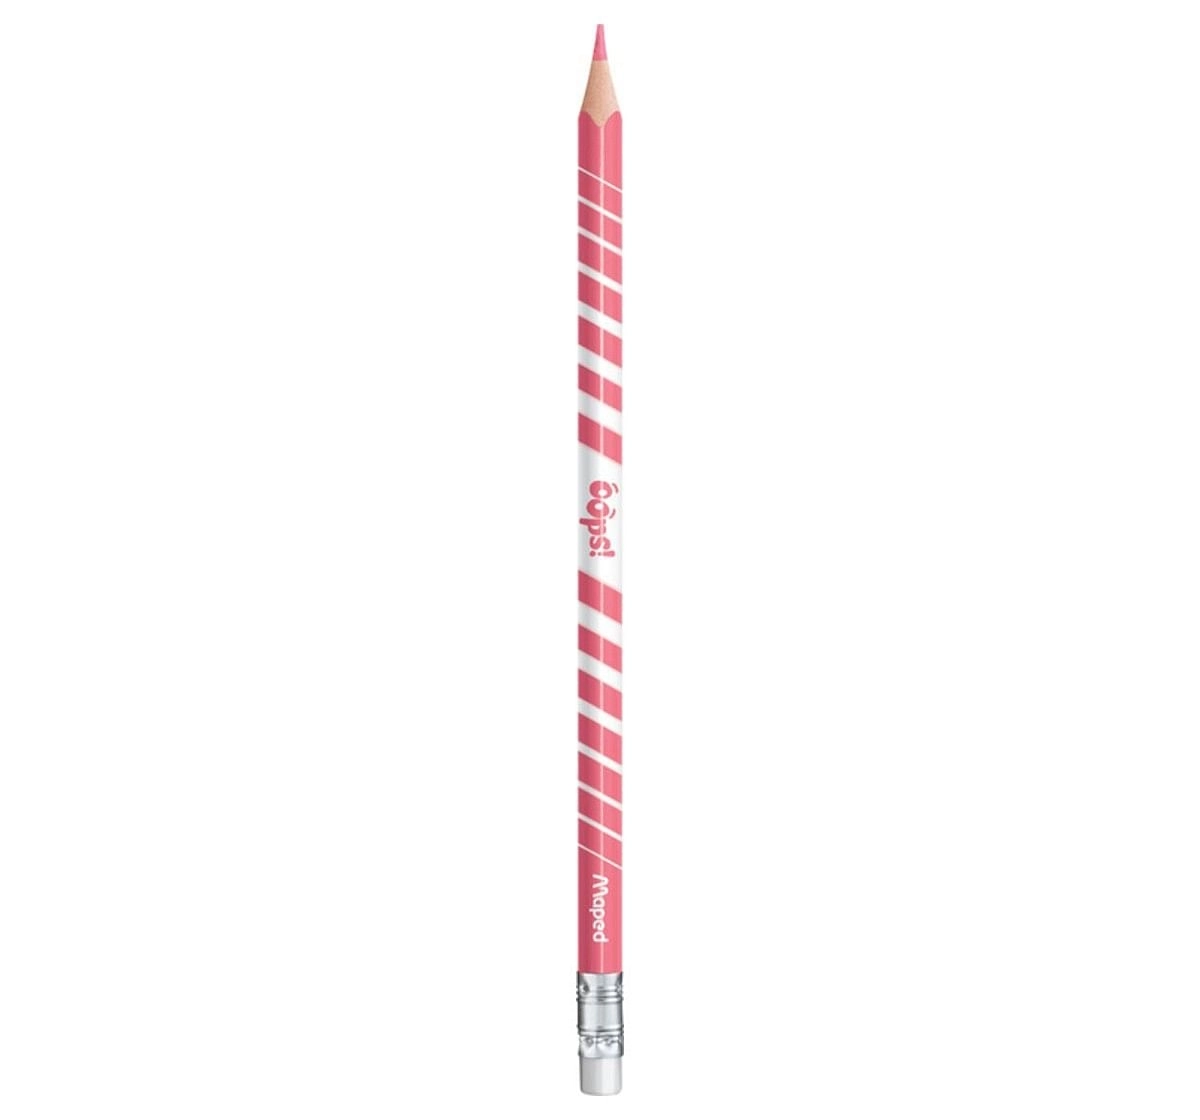 Maped 24 Erasable Colour Pencils, 7Y+ (Multicolour)